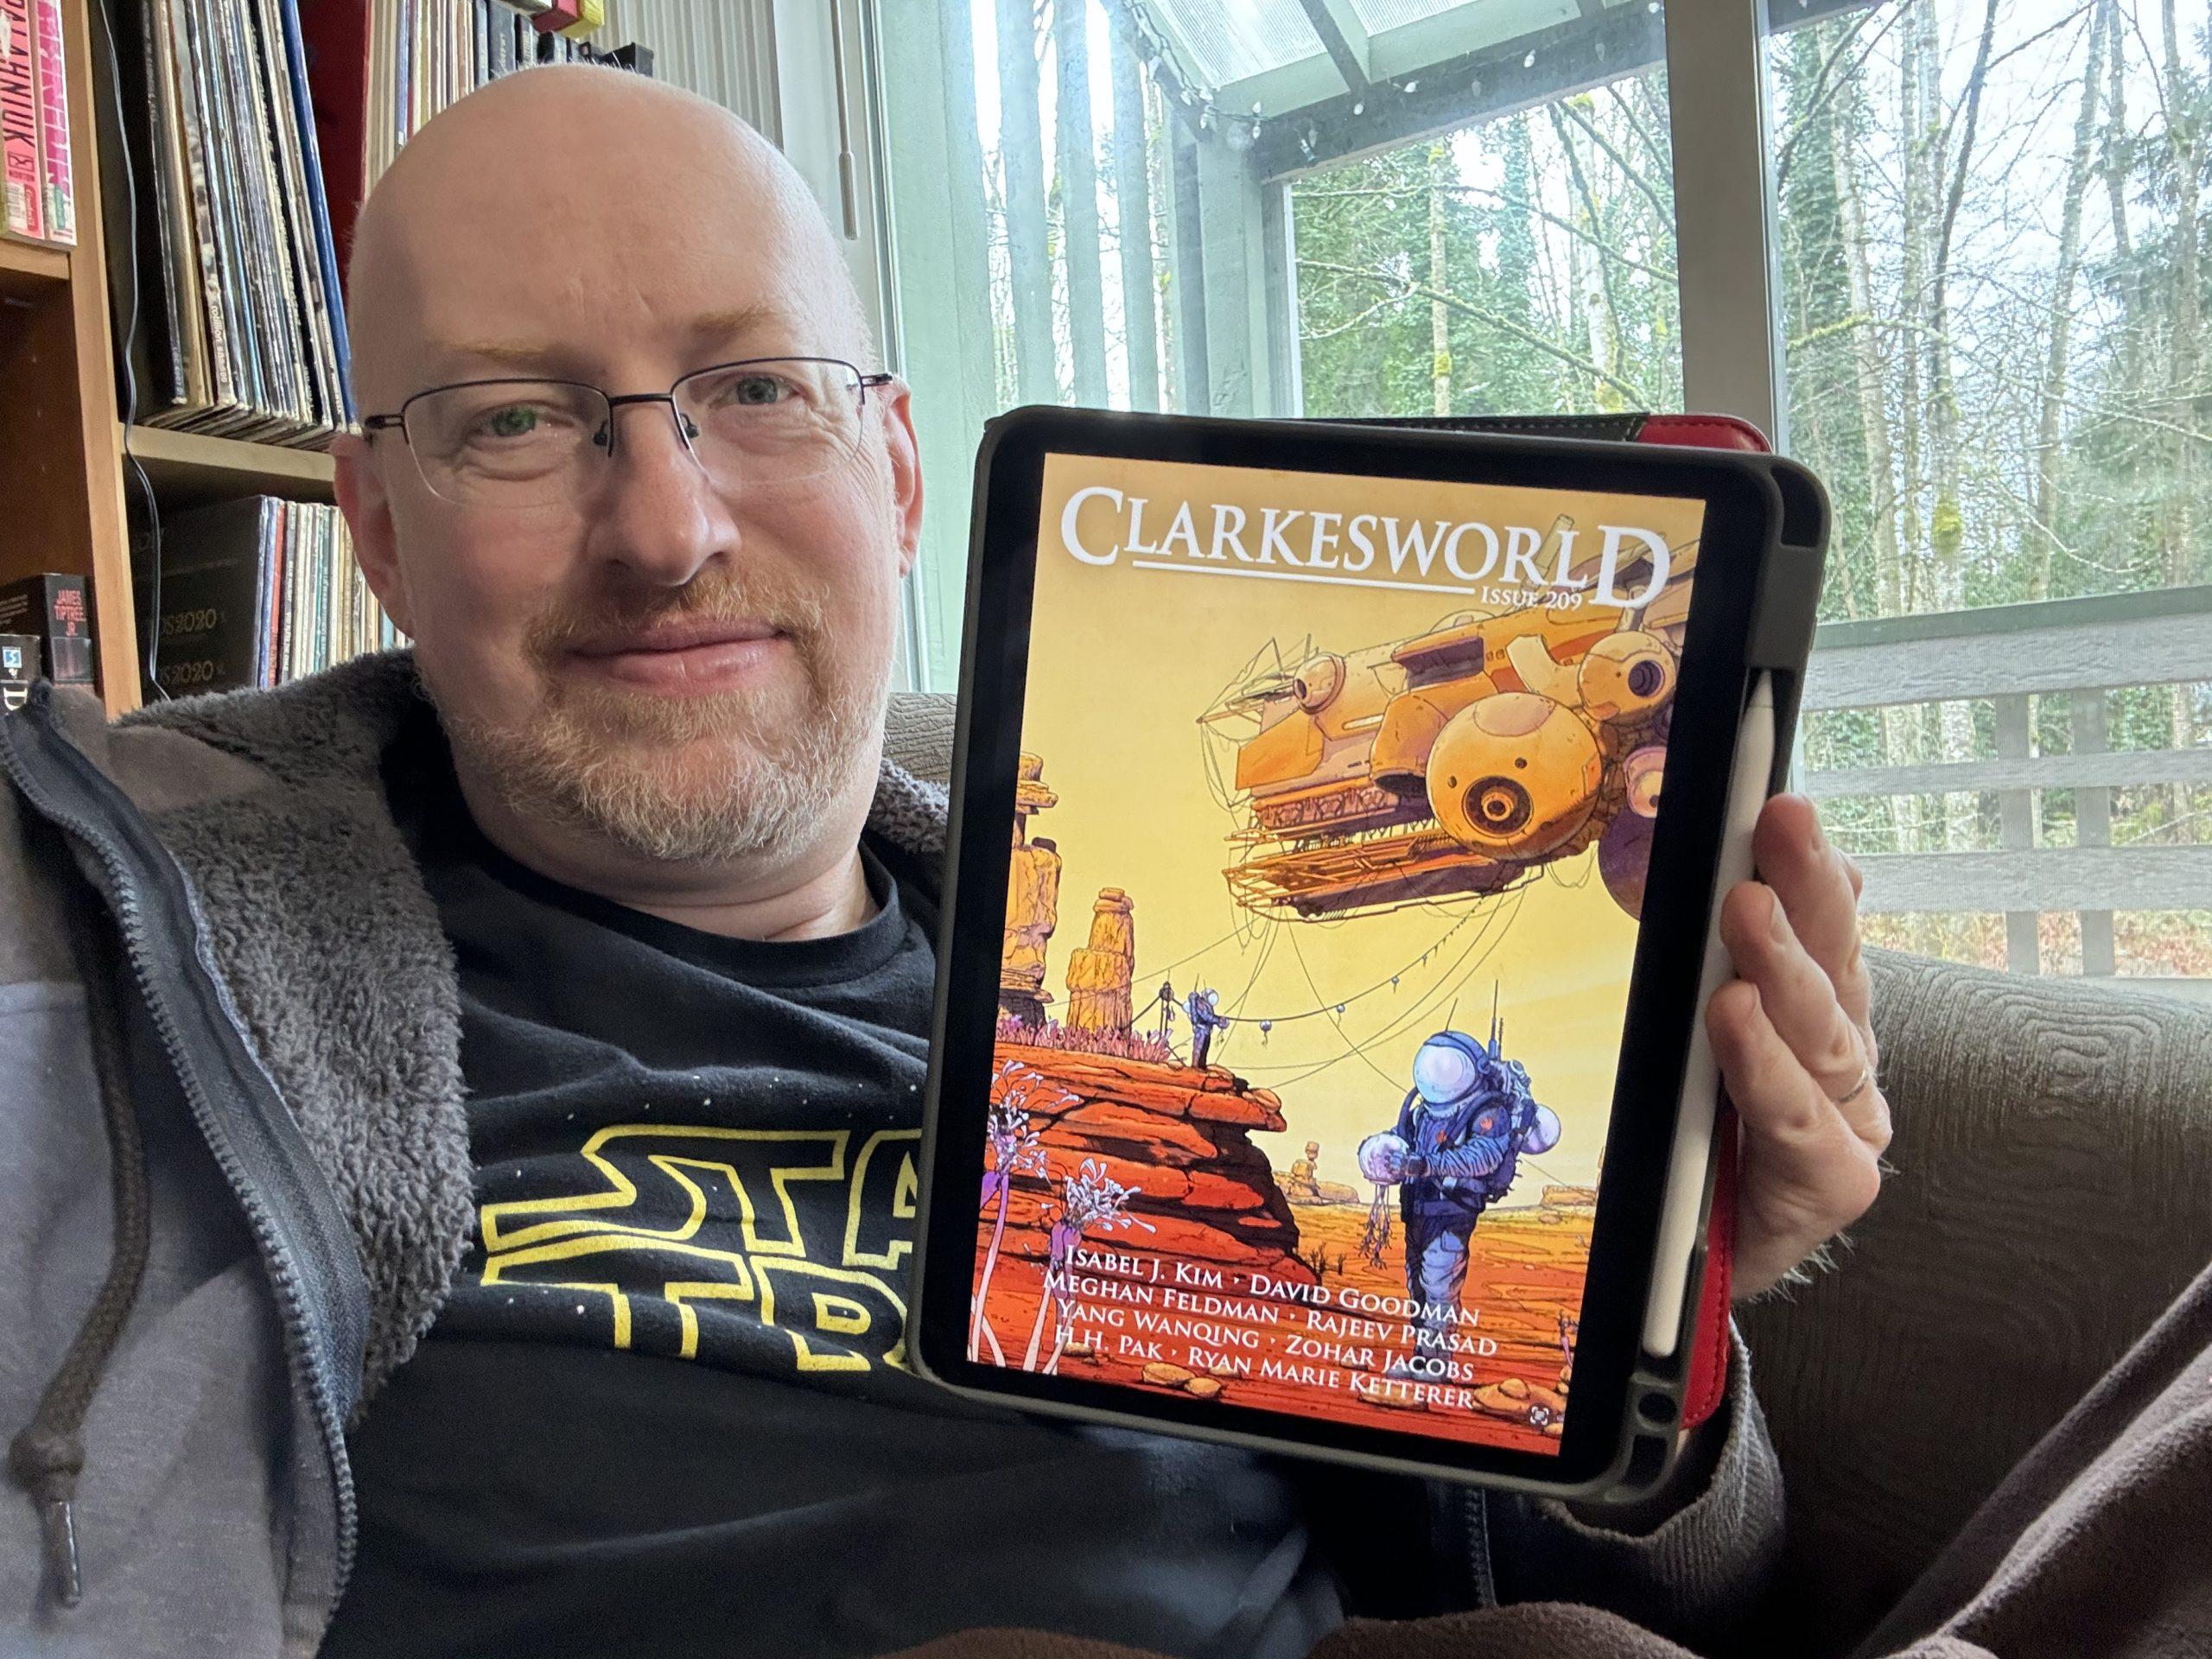 Me holding Clarkesworld 209 on my iPad